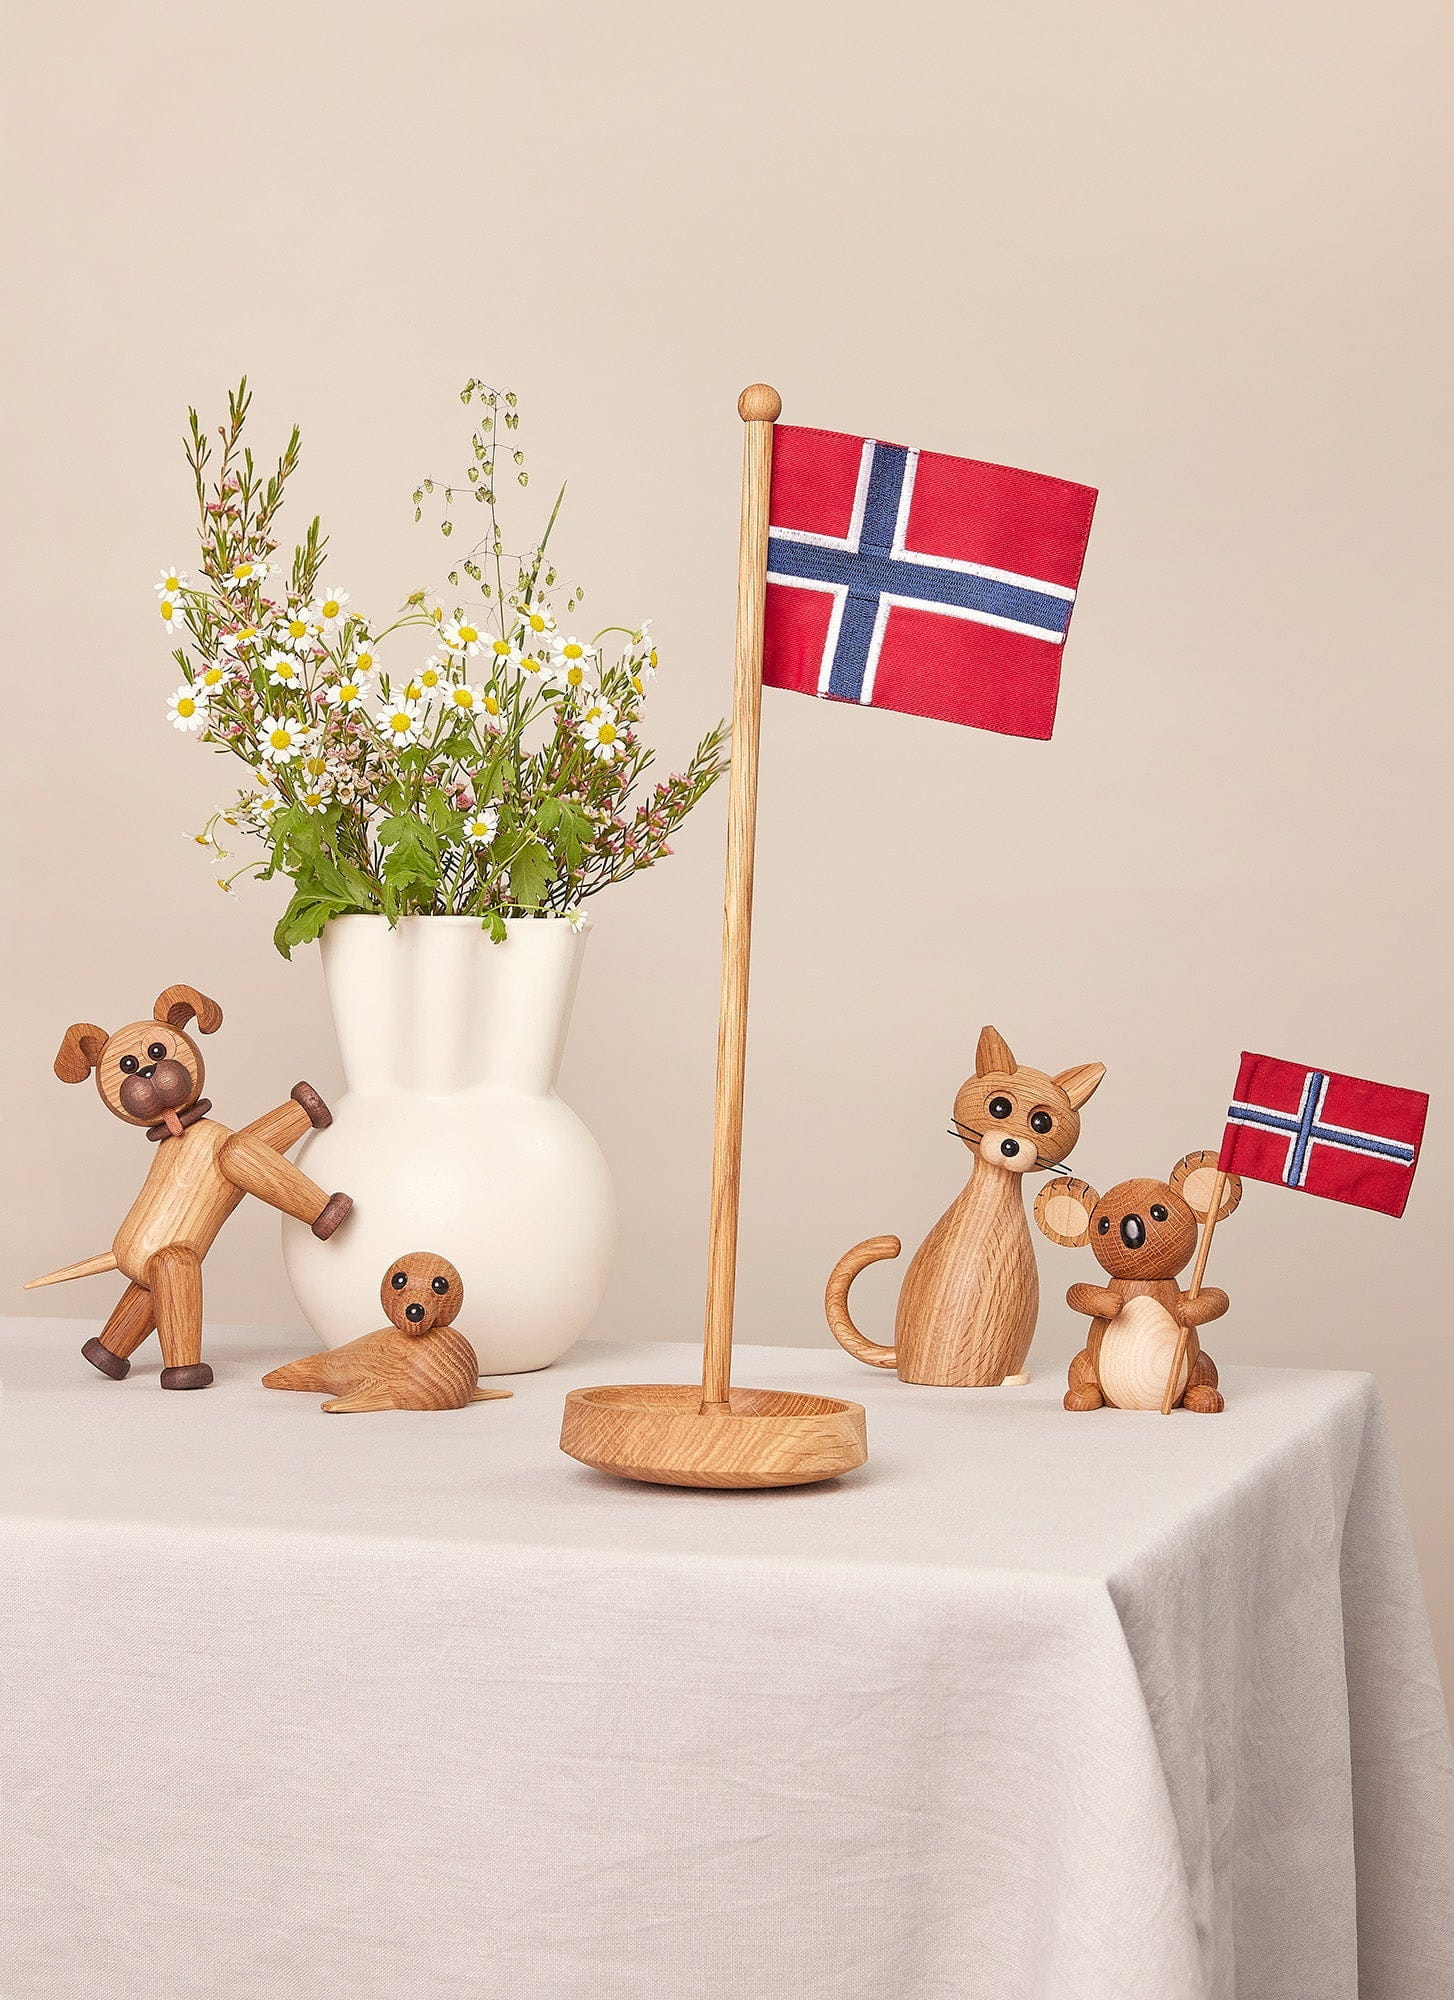 Spring Copenhagen Tabelvlag, Noorse vlag